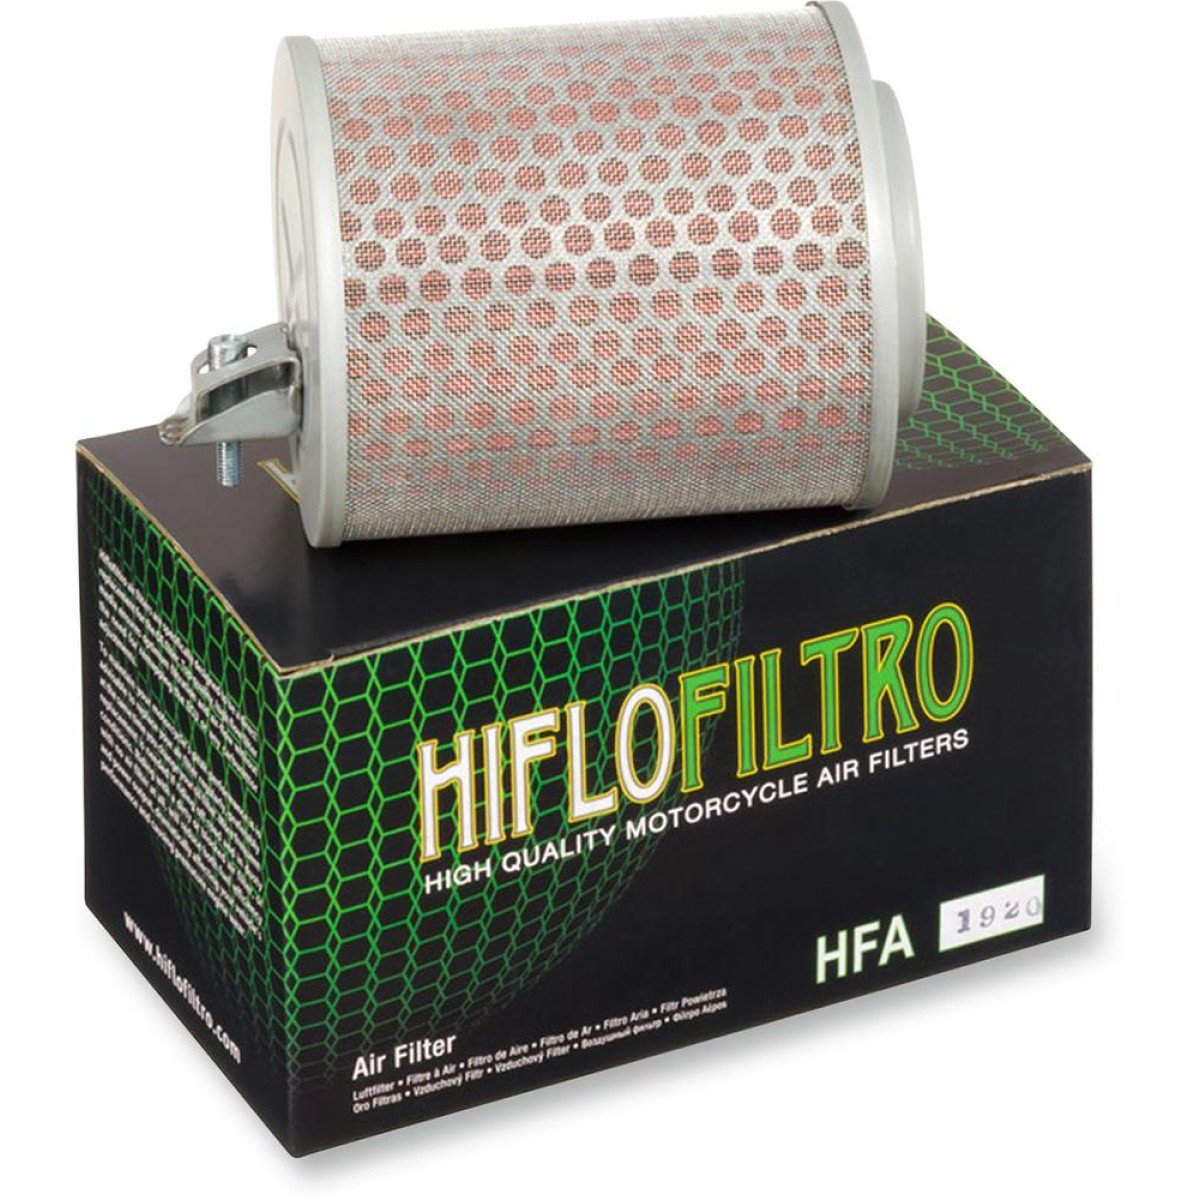 FILTRO AIRE HIFLOFILTRO HFA1920 HONDA RVT 1000 00/06 / HONDA VTR 1000 00/05